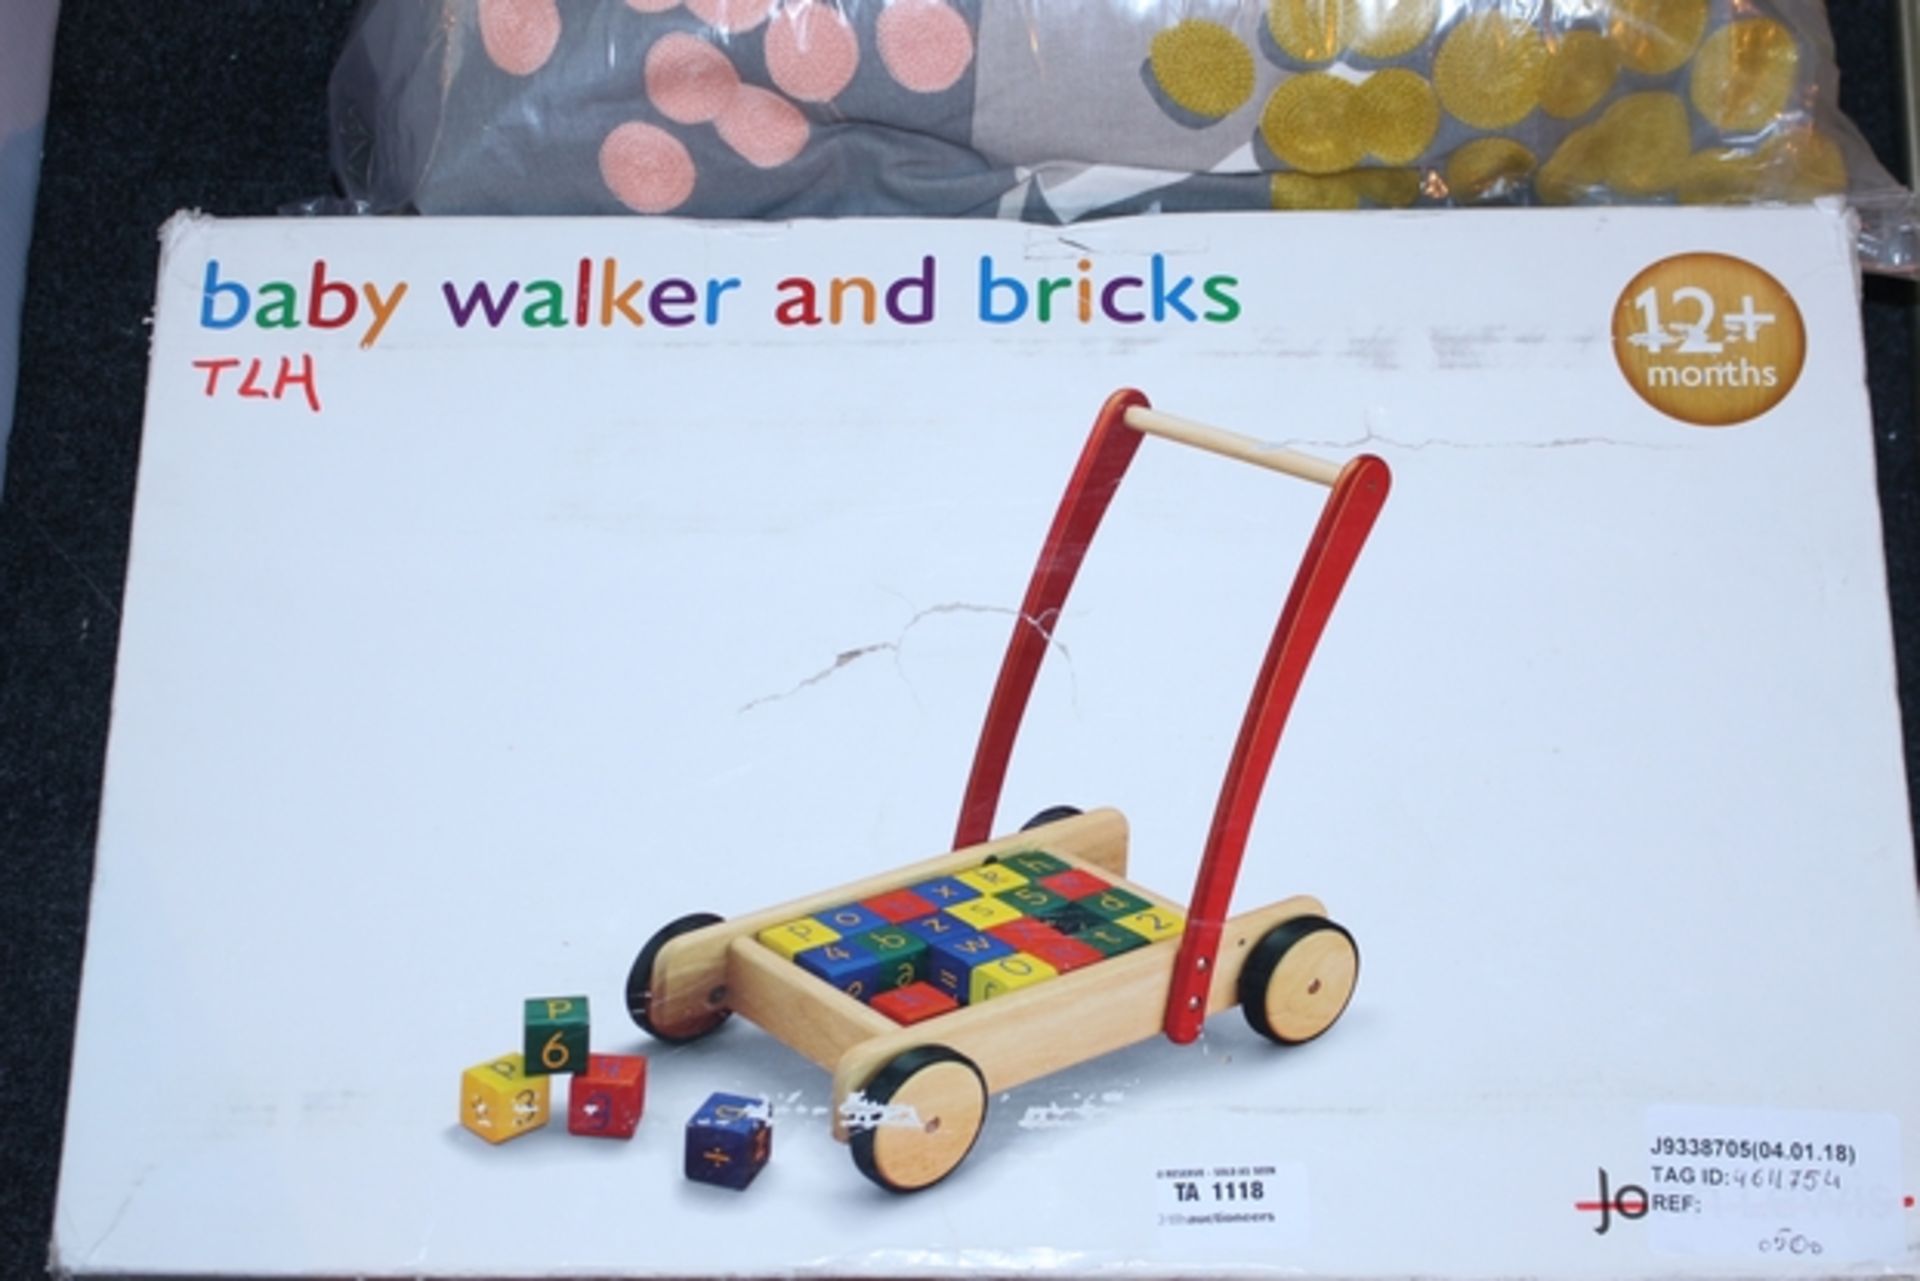 1X BABY WALKER AND BRICKS RRP £50 (JL-9338075) (04/01/18) (4611754)